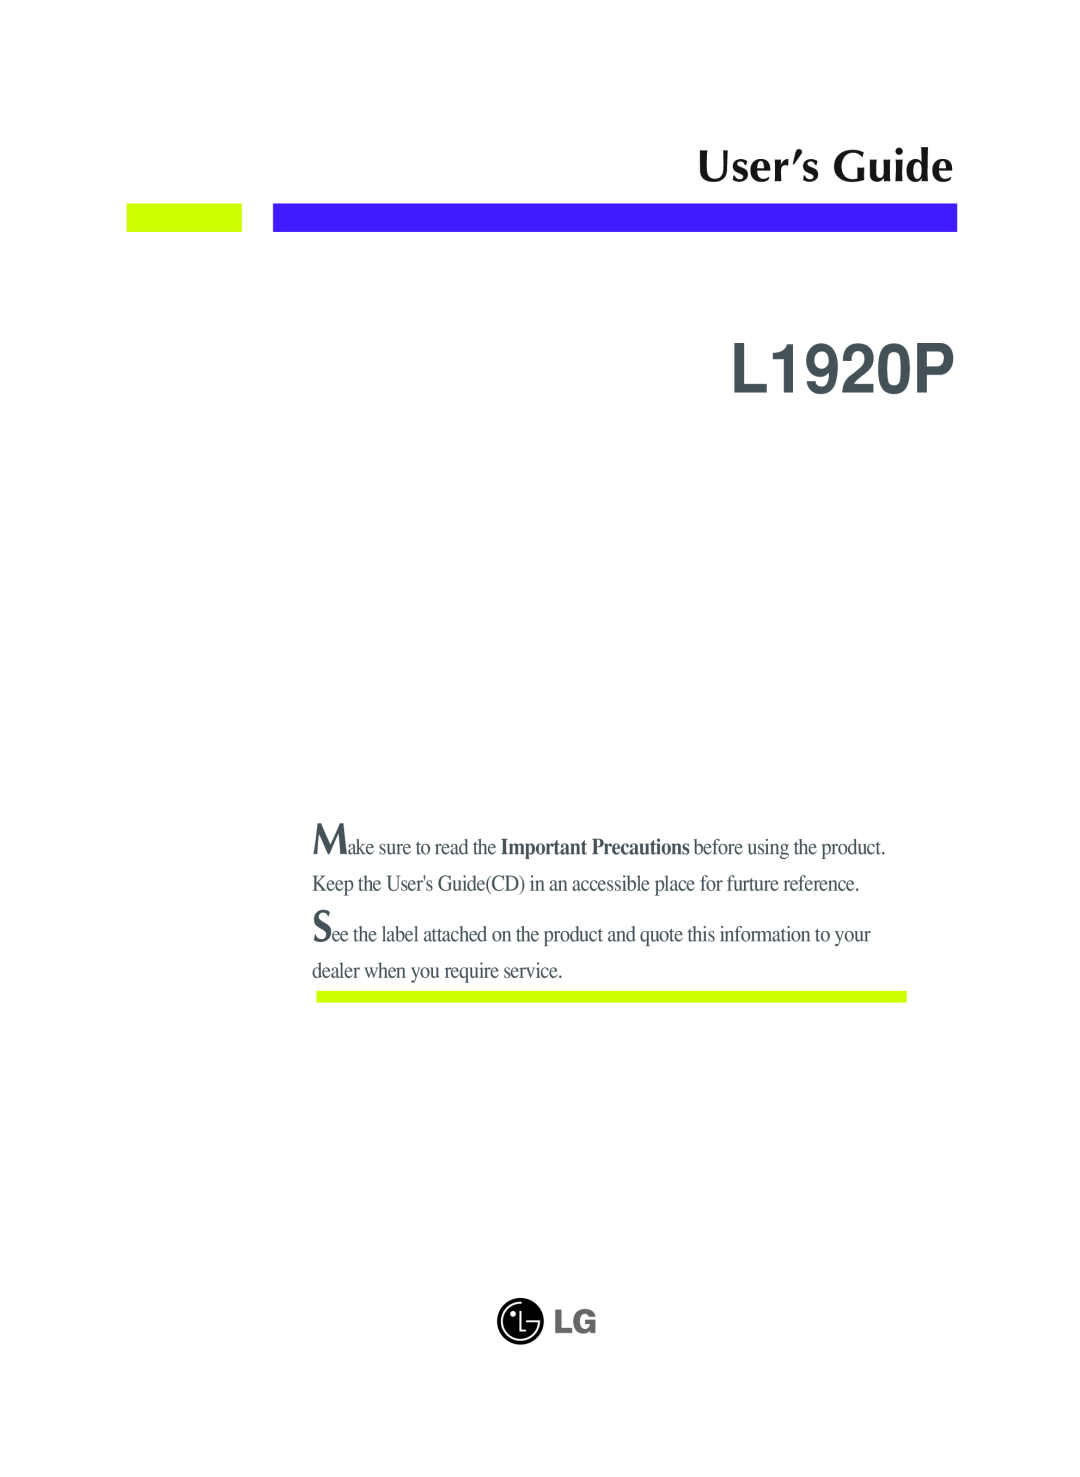 LG Electronics L1920P manual User’s Guide 